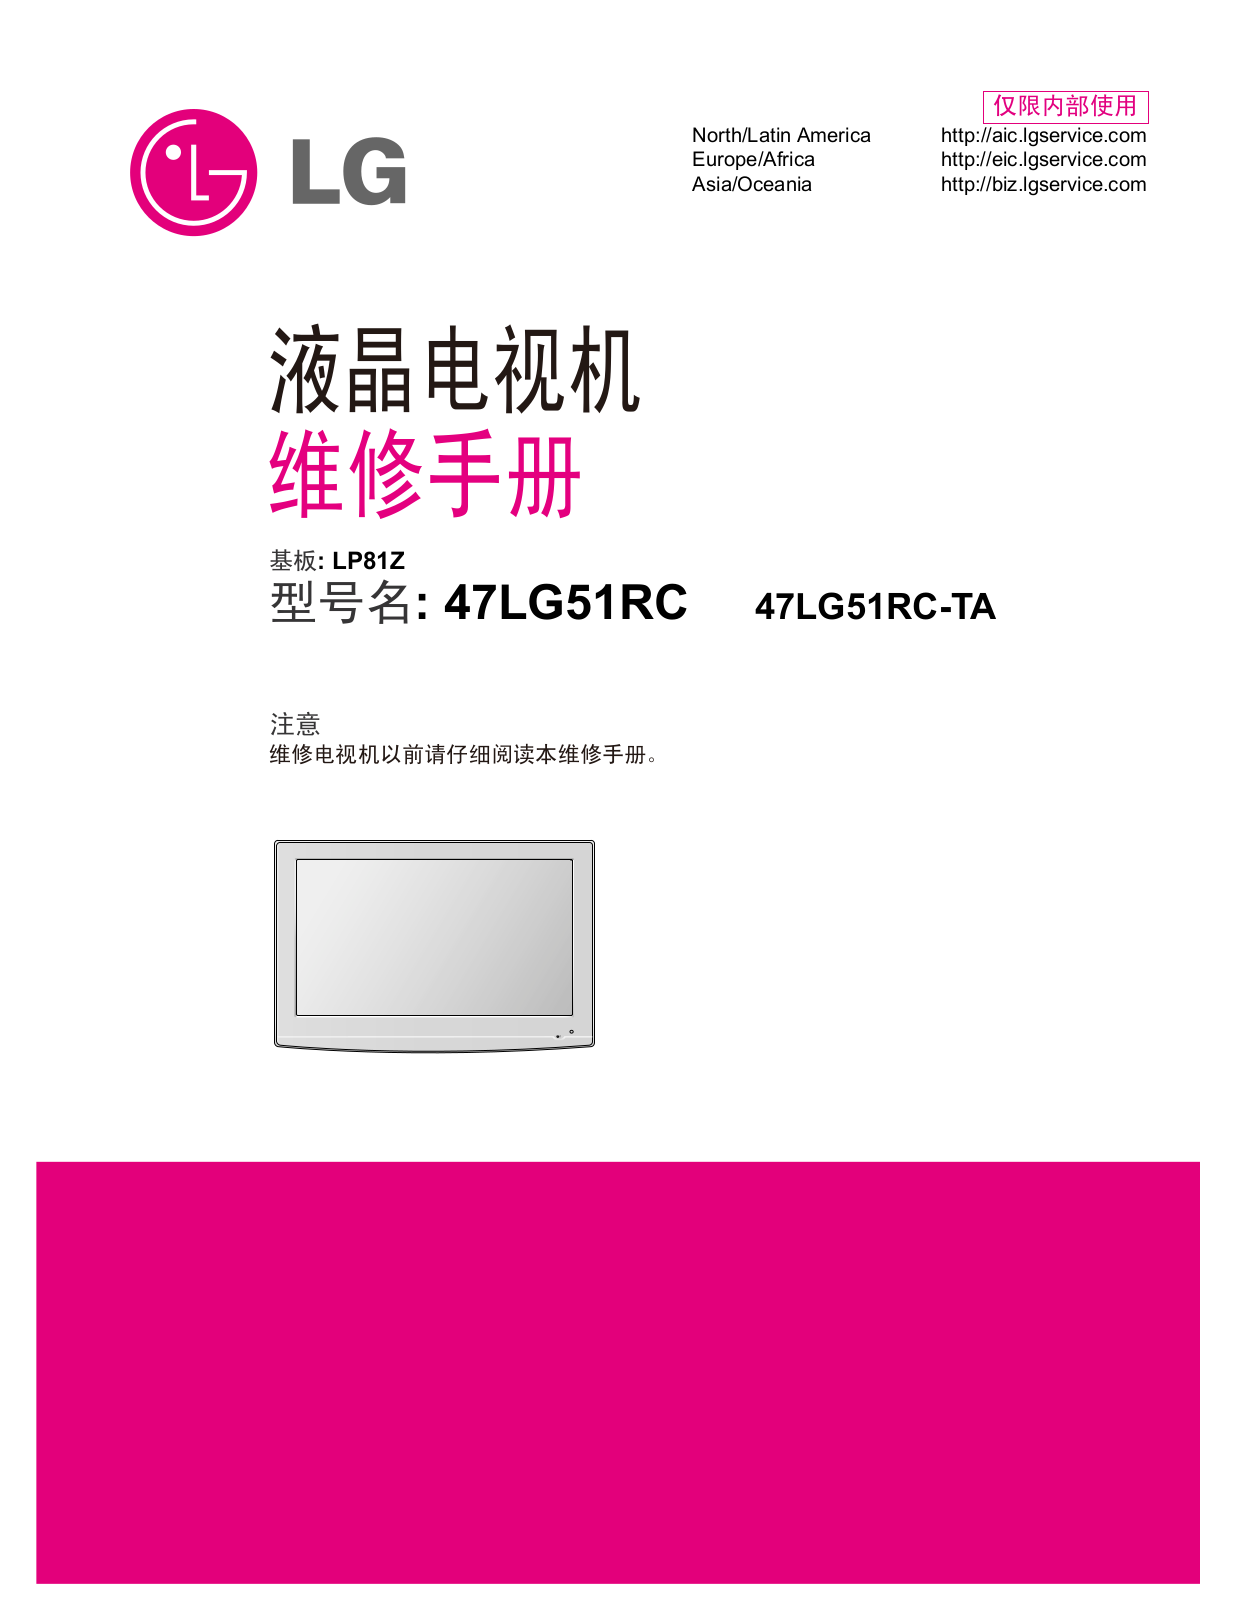 LG 47LG51RC, 47LG51RC-TA User Manual